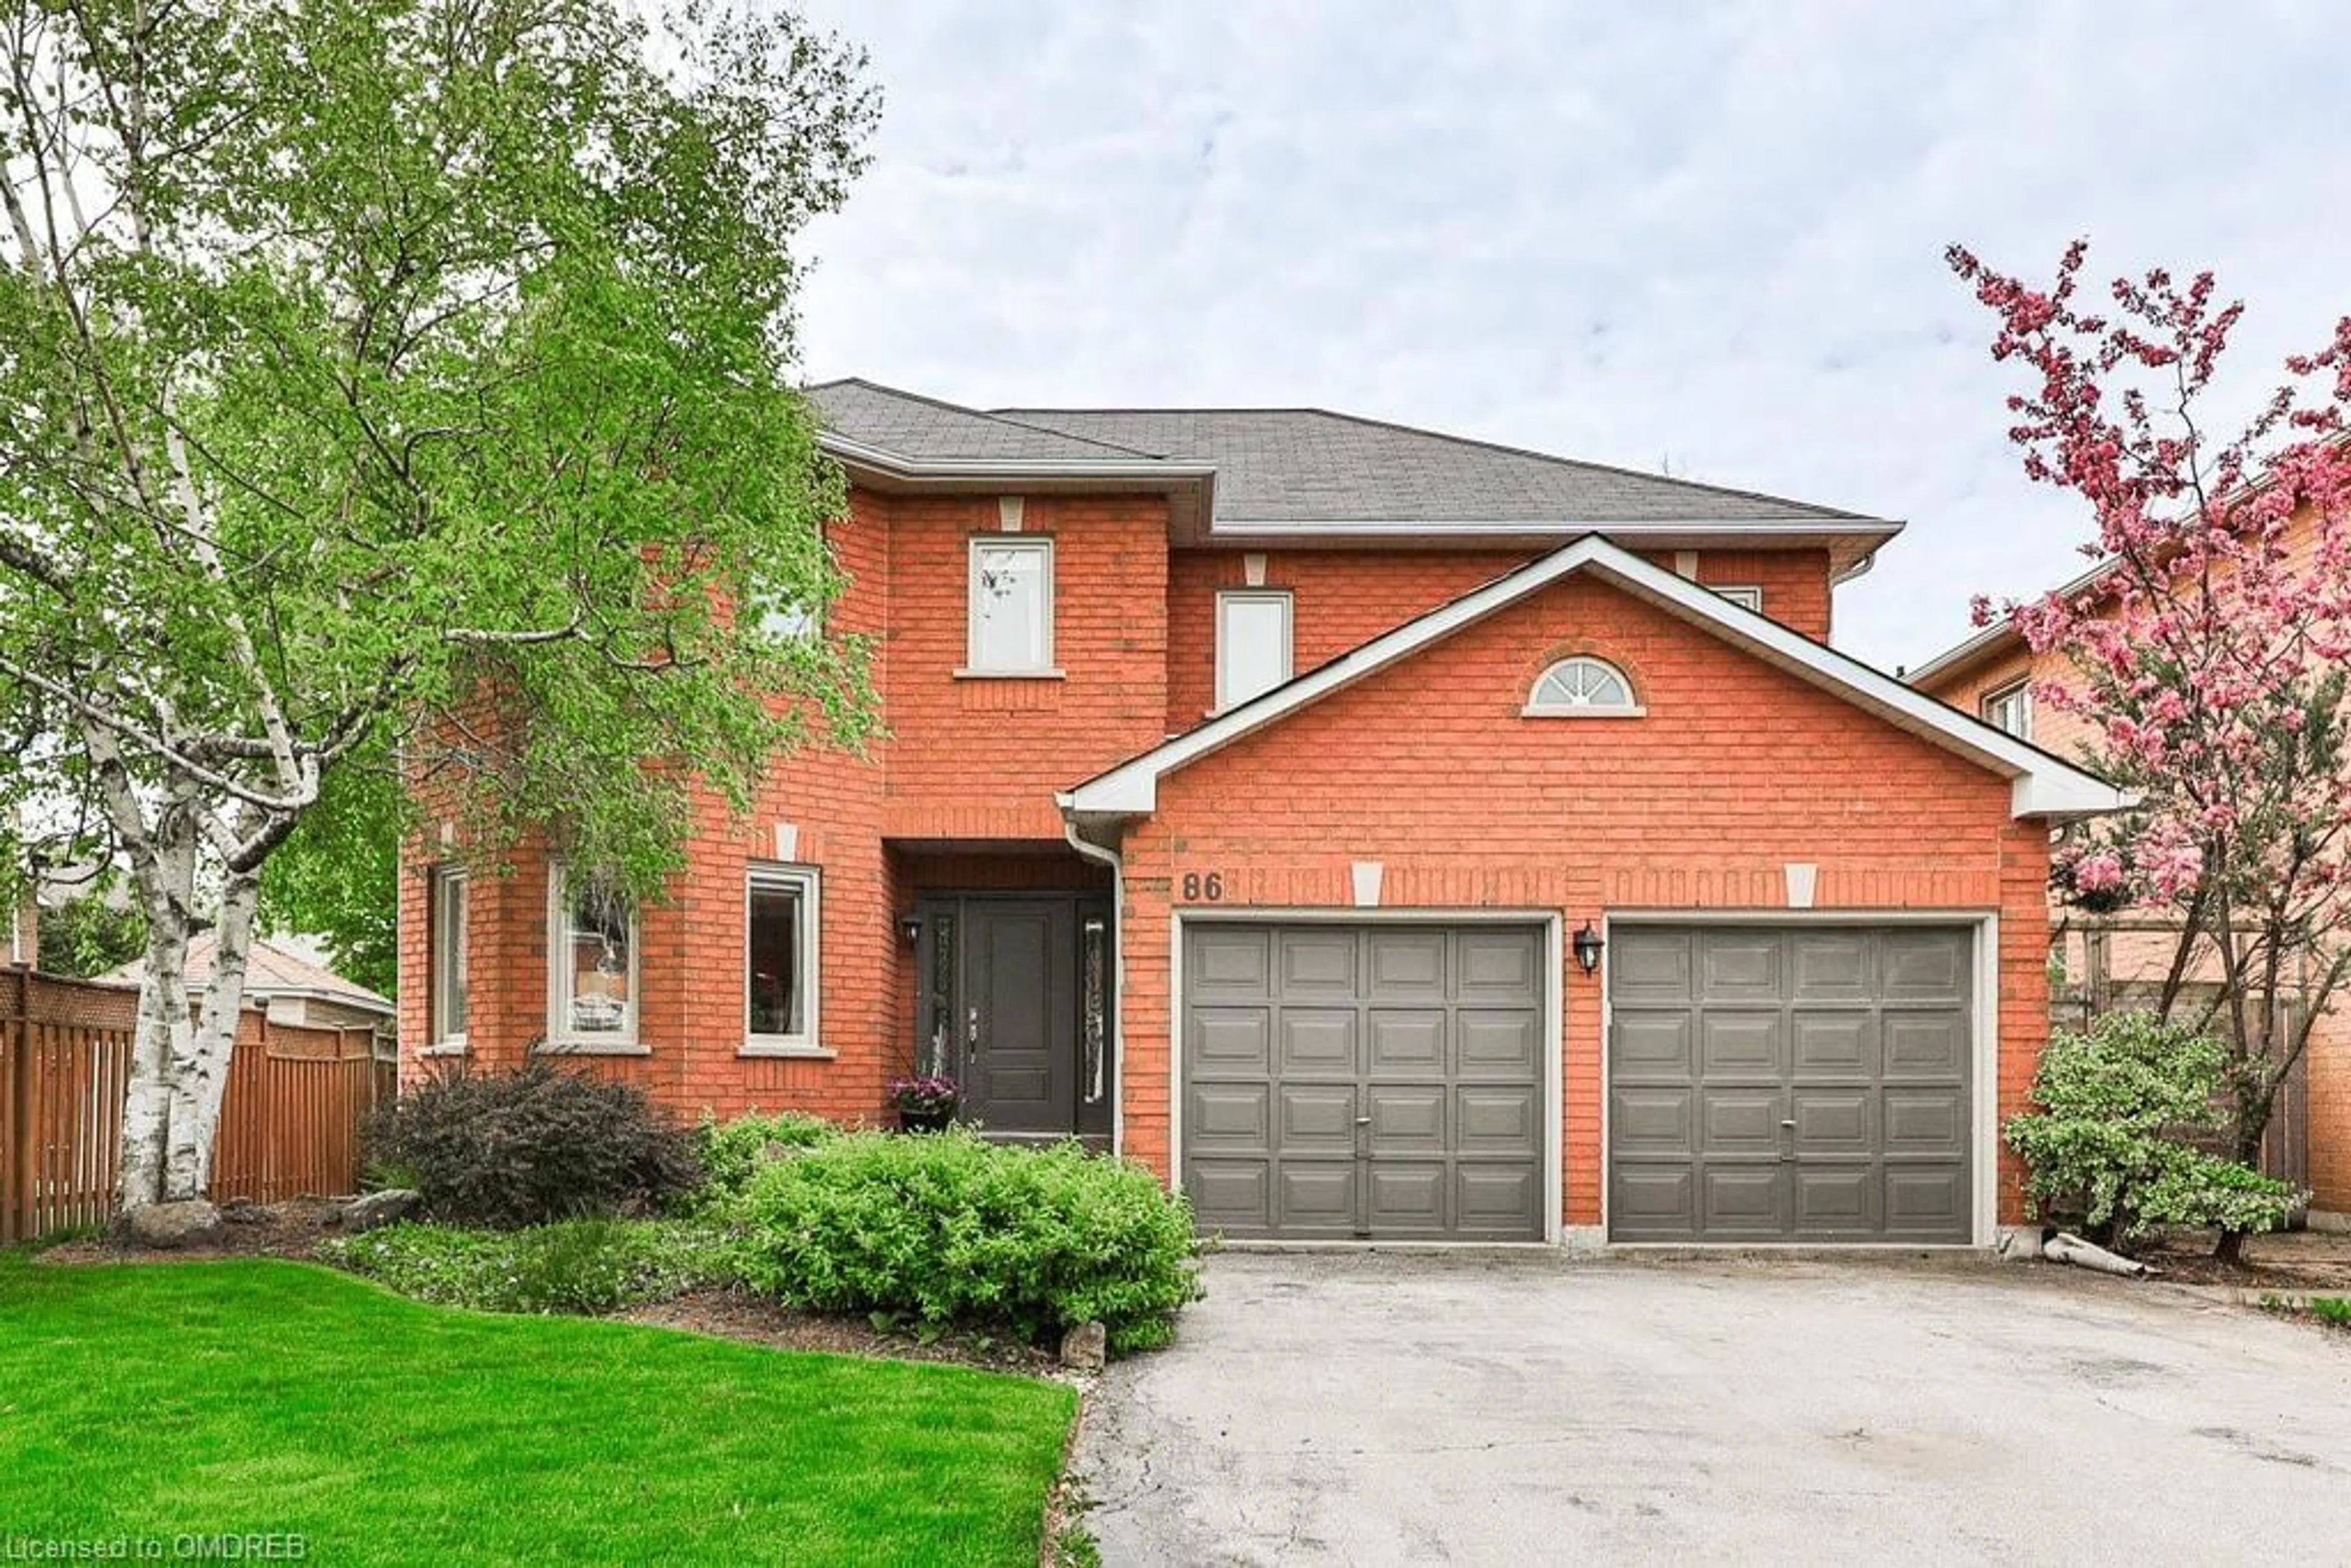 Home with brick exterior material for 86 River Glen Blvd, Oakville Ontario L6H 5Z6